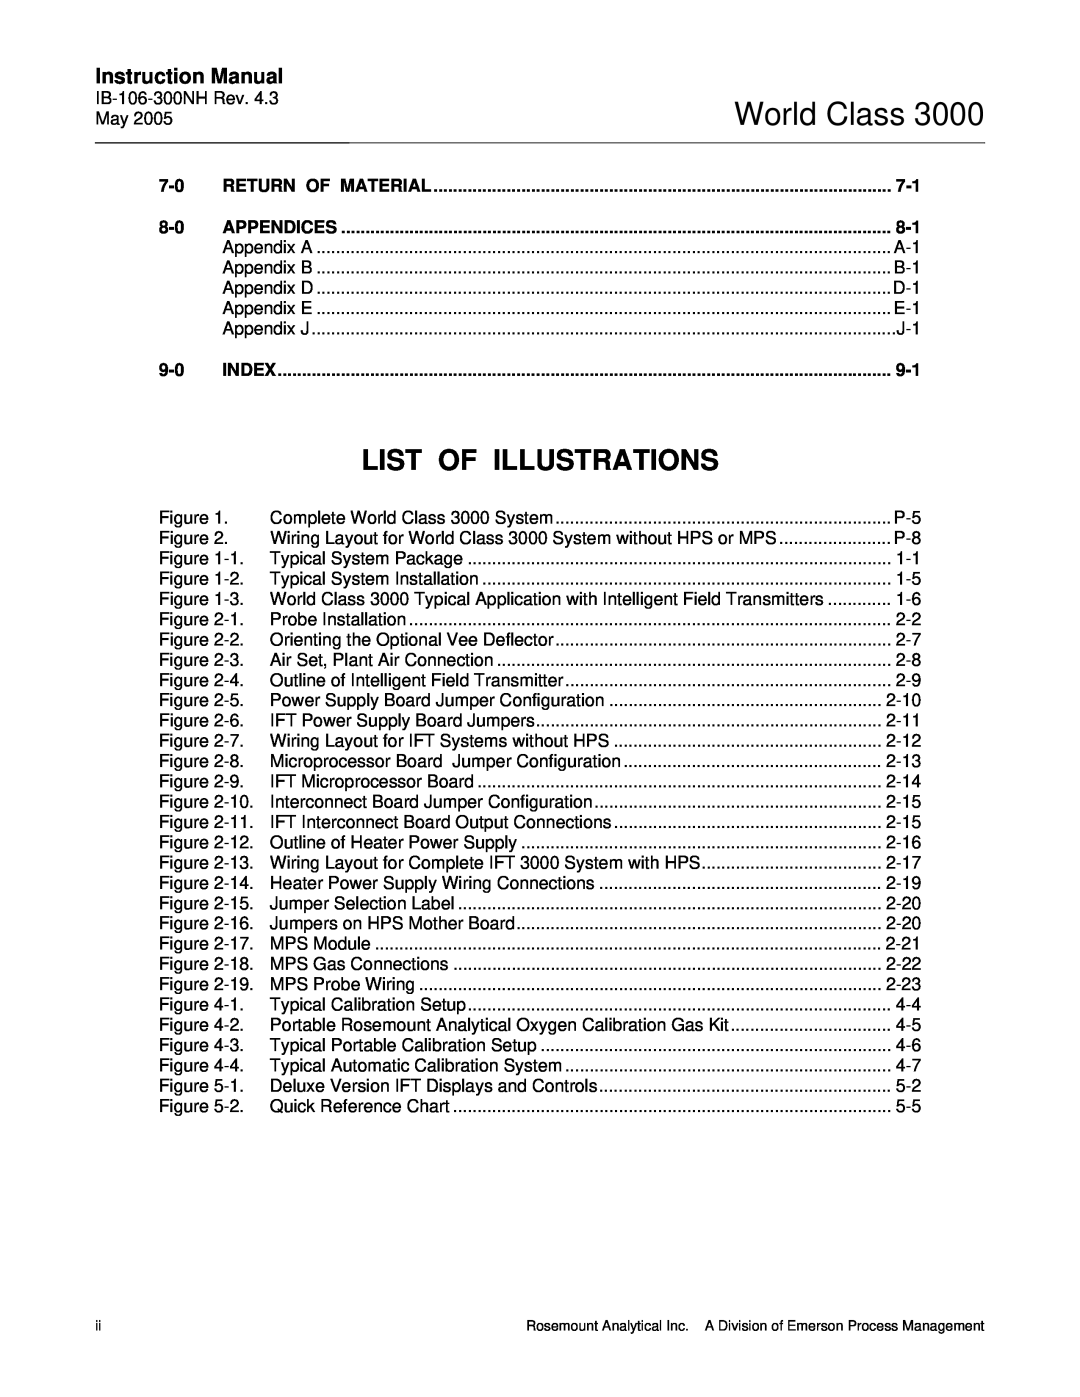 Emerson 3000 instruction manual List Of Illustrations, World Class, Instruction Manual 